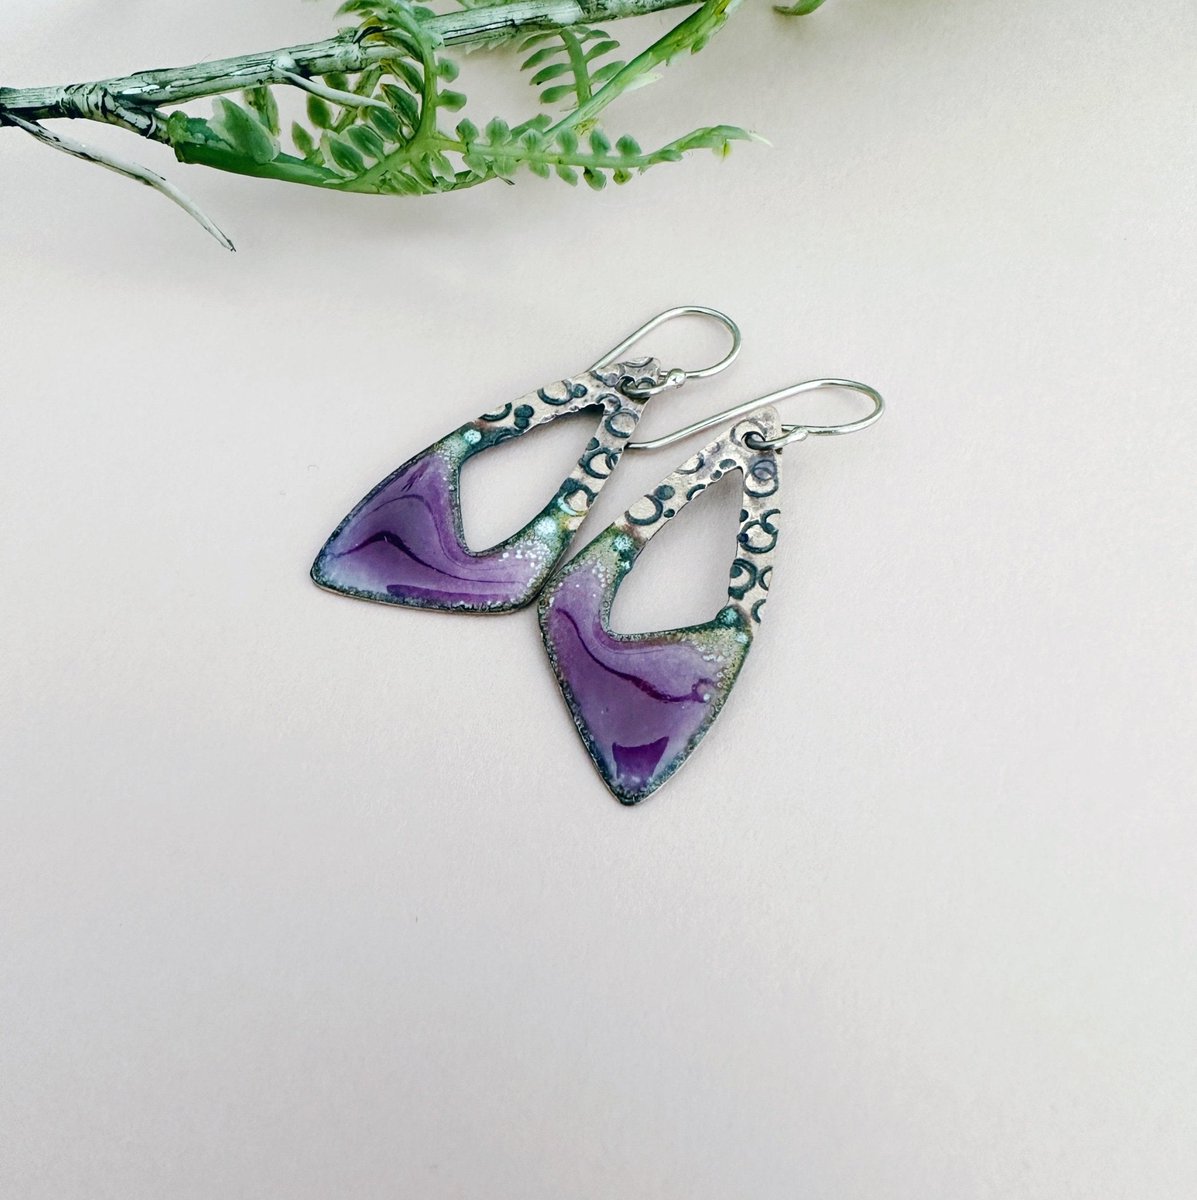 Irregular Triangle Earrings - Purple tuppu.net/76a5d53a #MHHSBD #UKHashtags ##UKGiftHour #HandmadeHour #bizbubble #shopsmall #giftideas #inbizhour #DangleEarrings